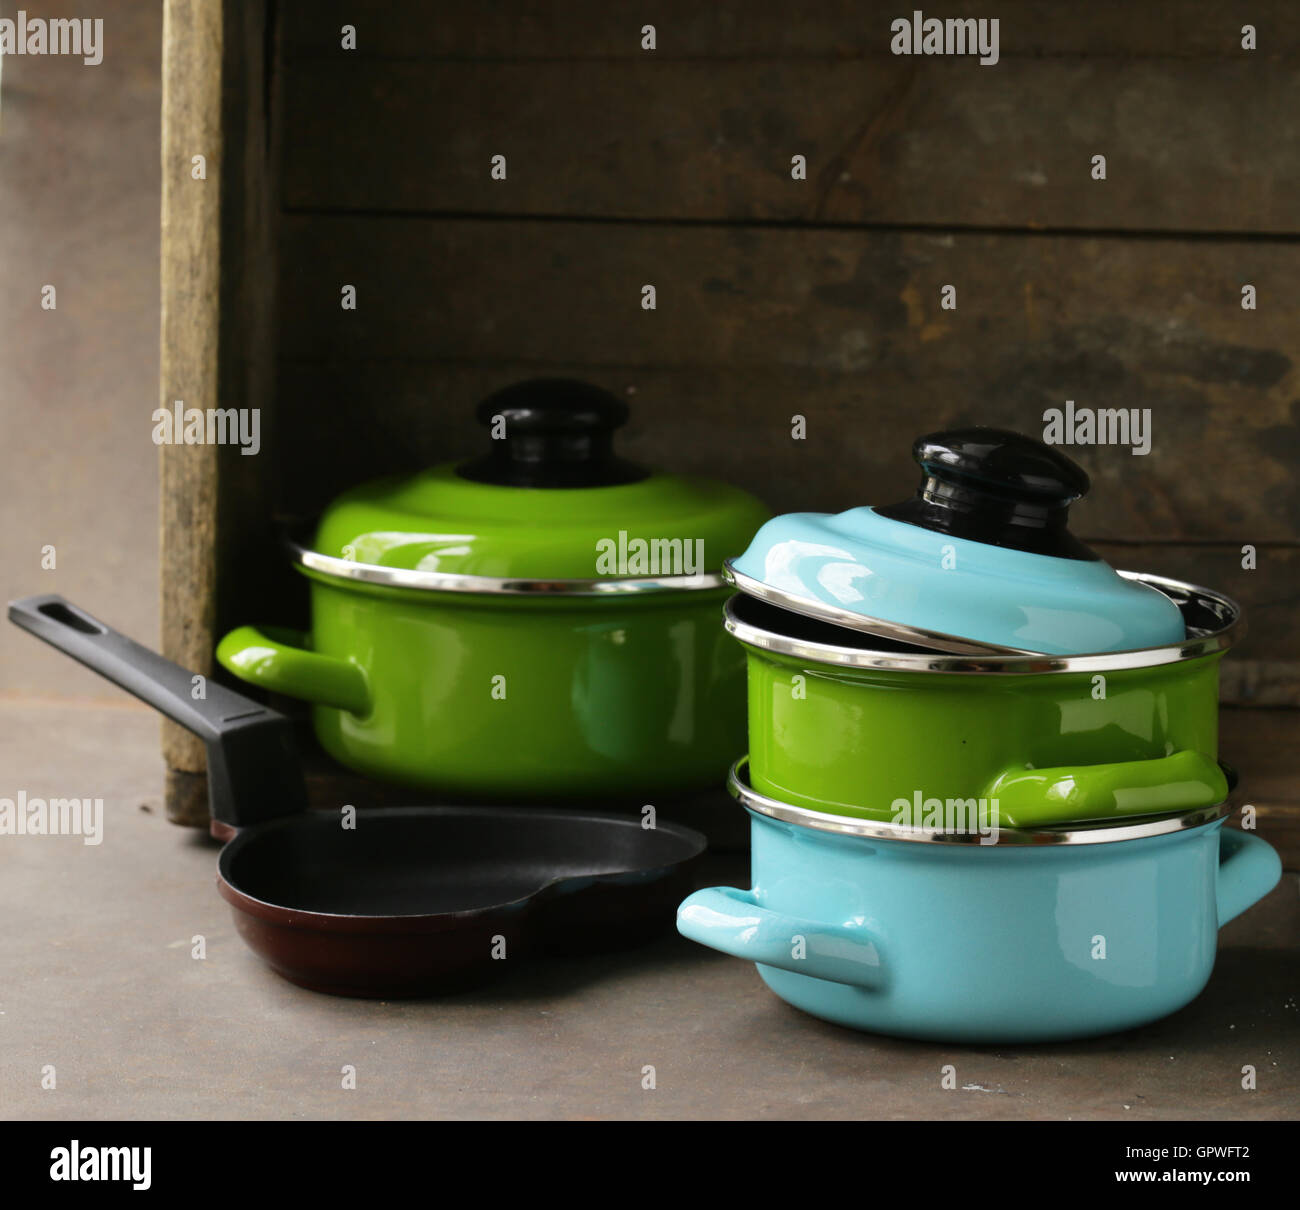 https://c8.alamy.com/comp/GPWFT2/set-of-metal-pots-cookware-on-a-wooden-domestic-kitchen-GPWFT2.jpg